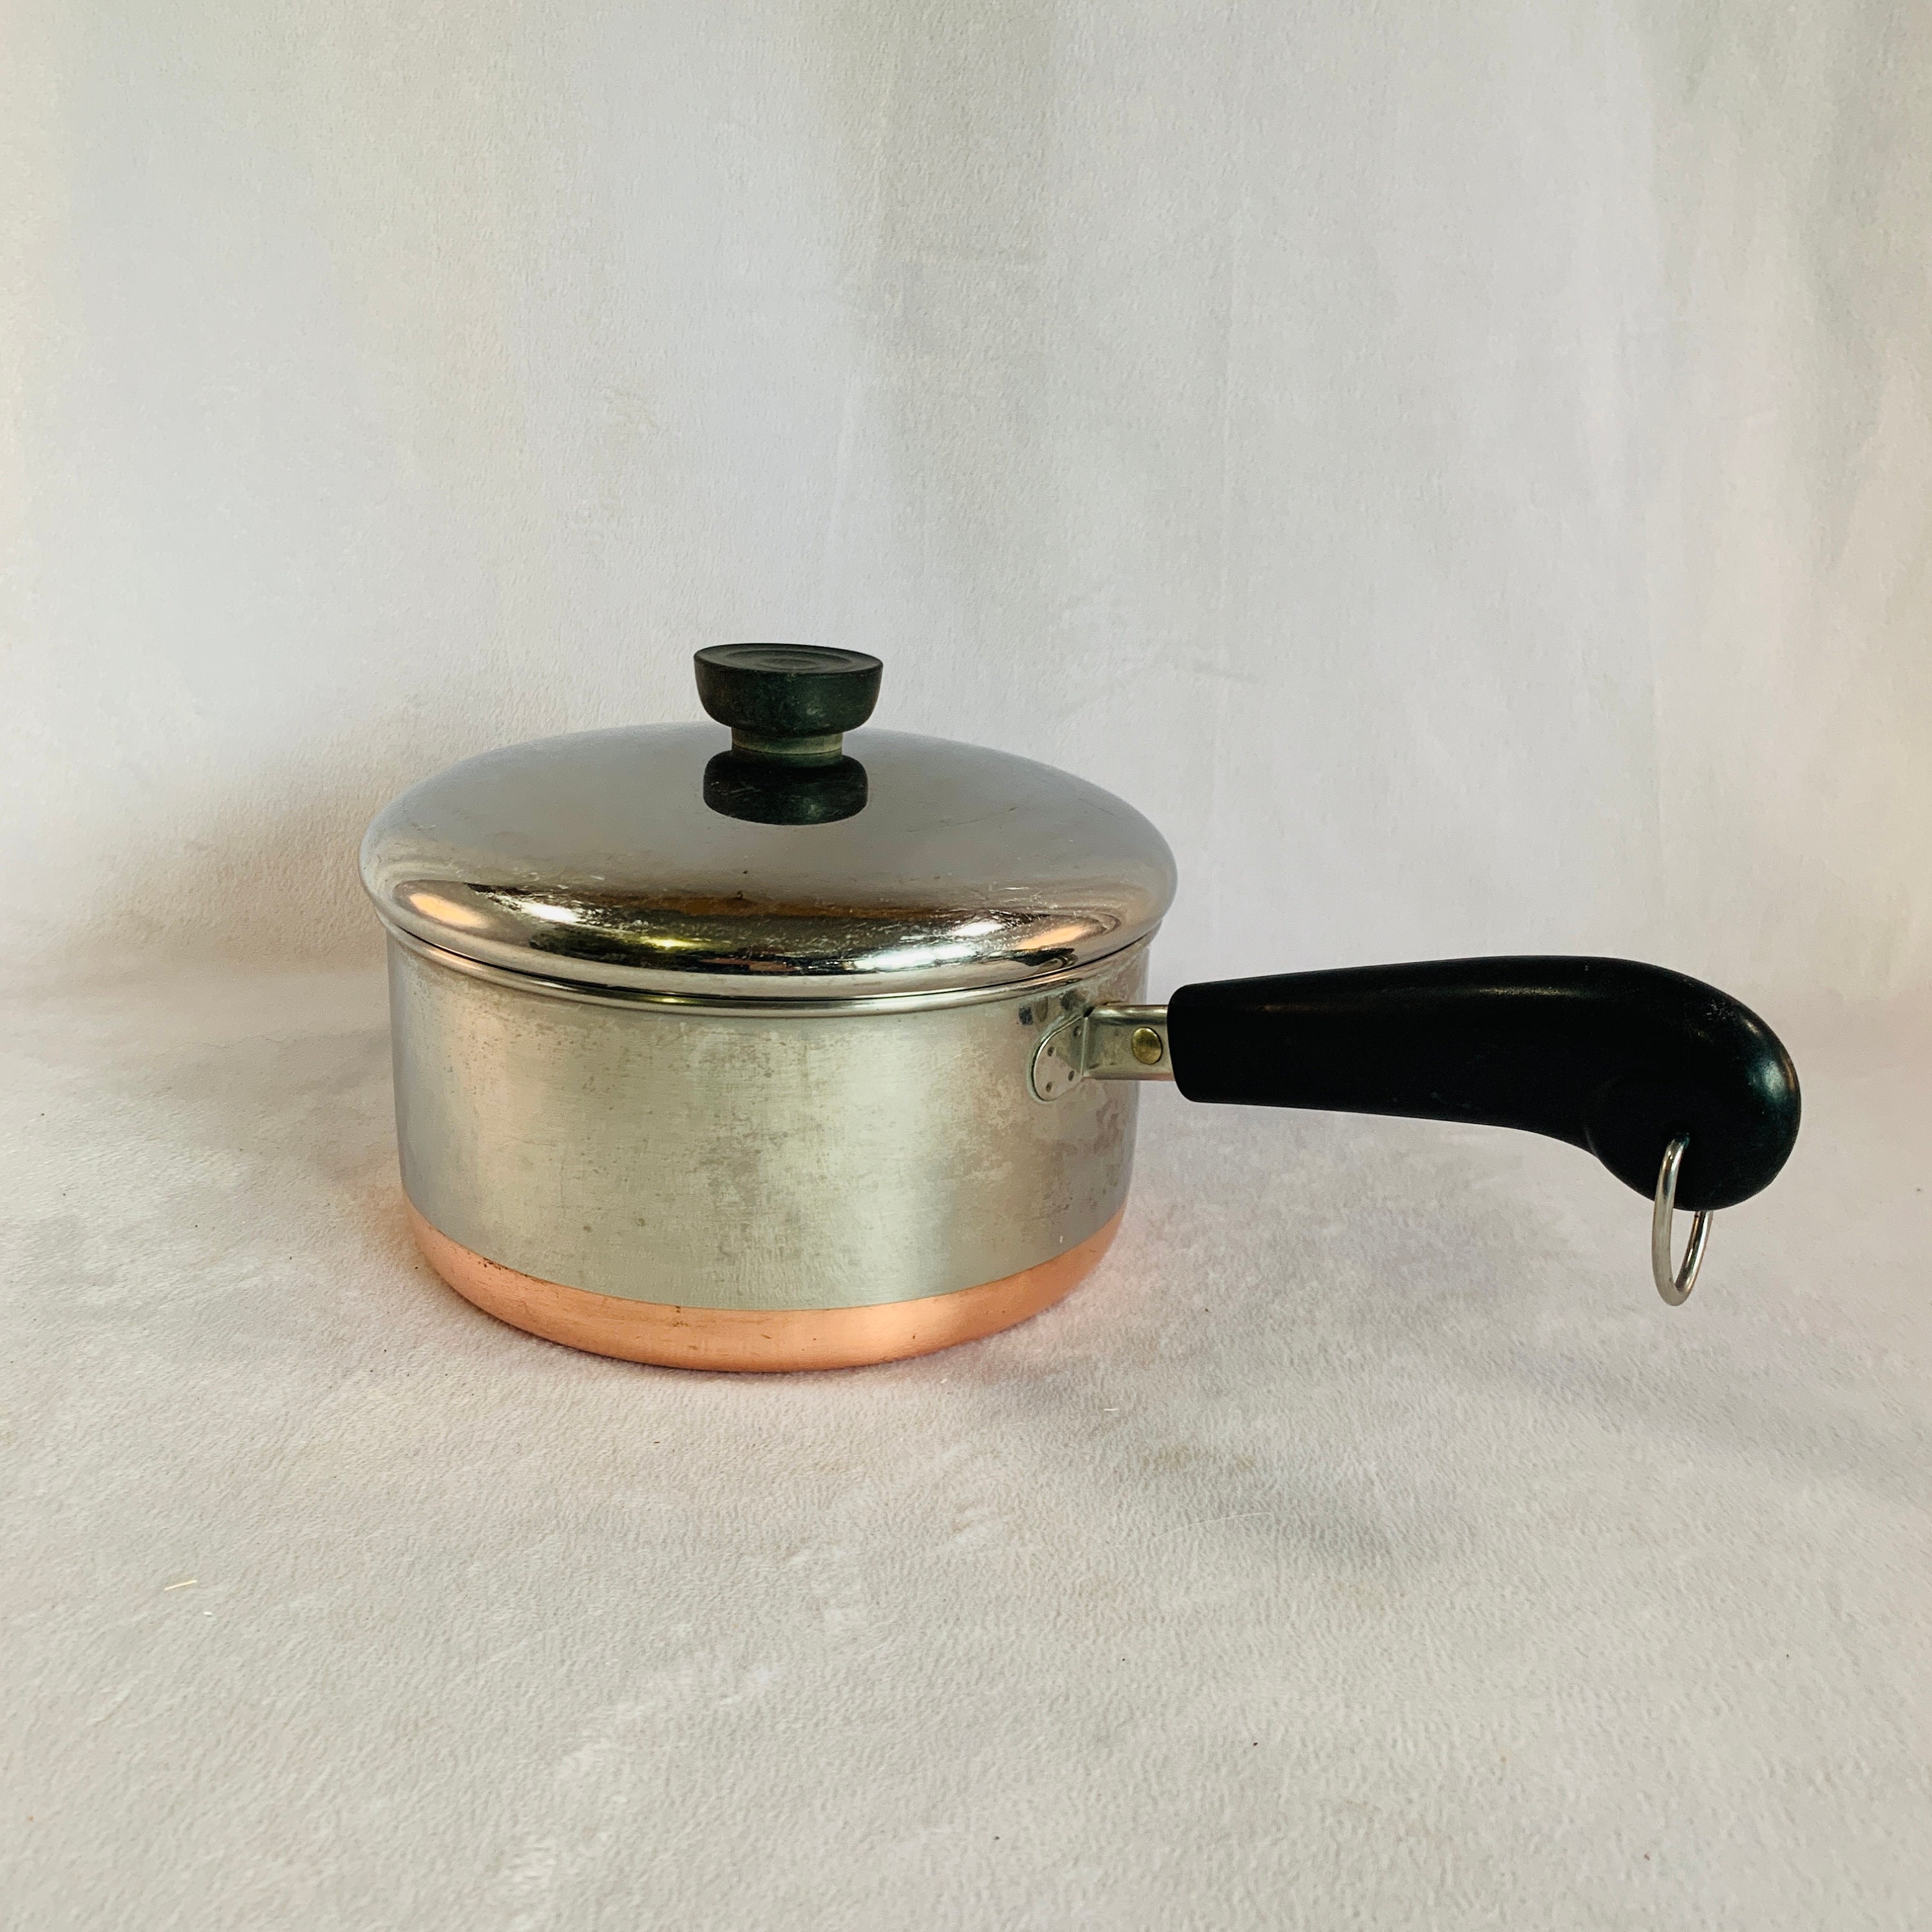  Medium 1-screw Replacement Handle for Revere Ware Pans